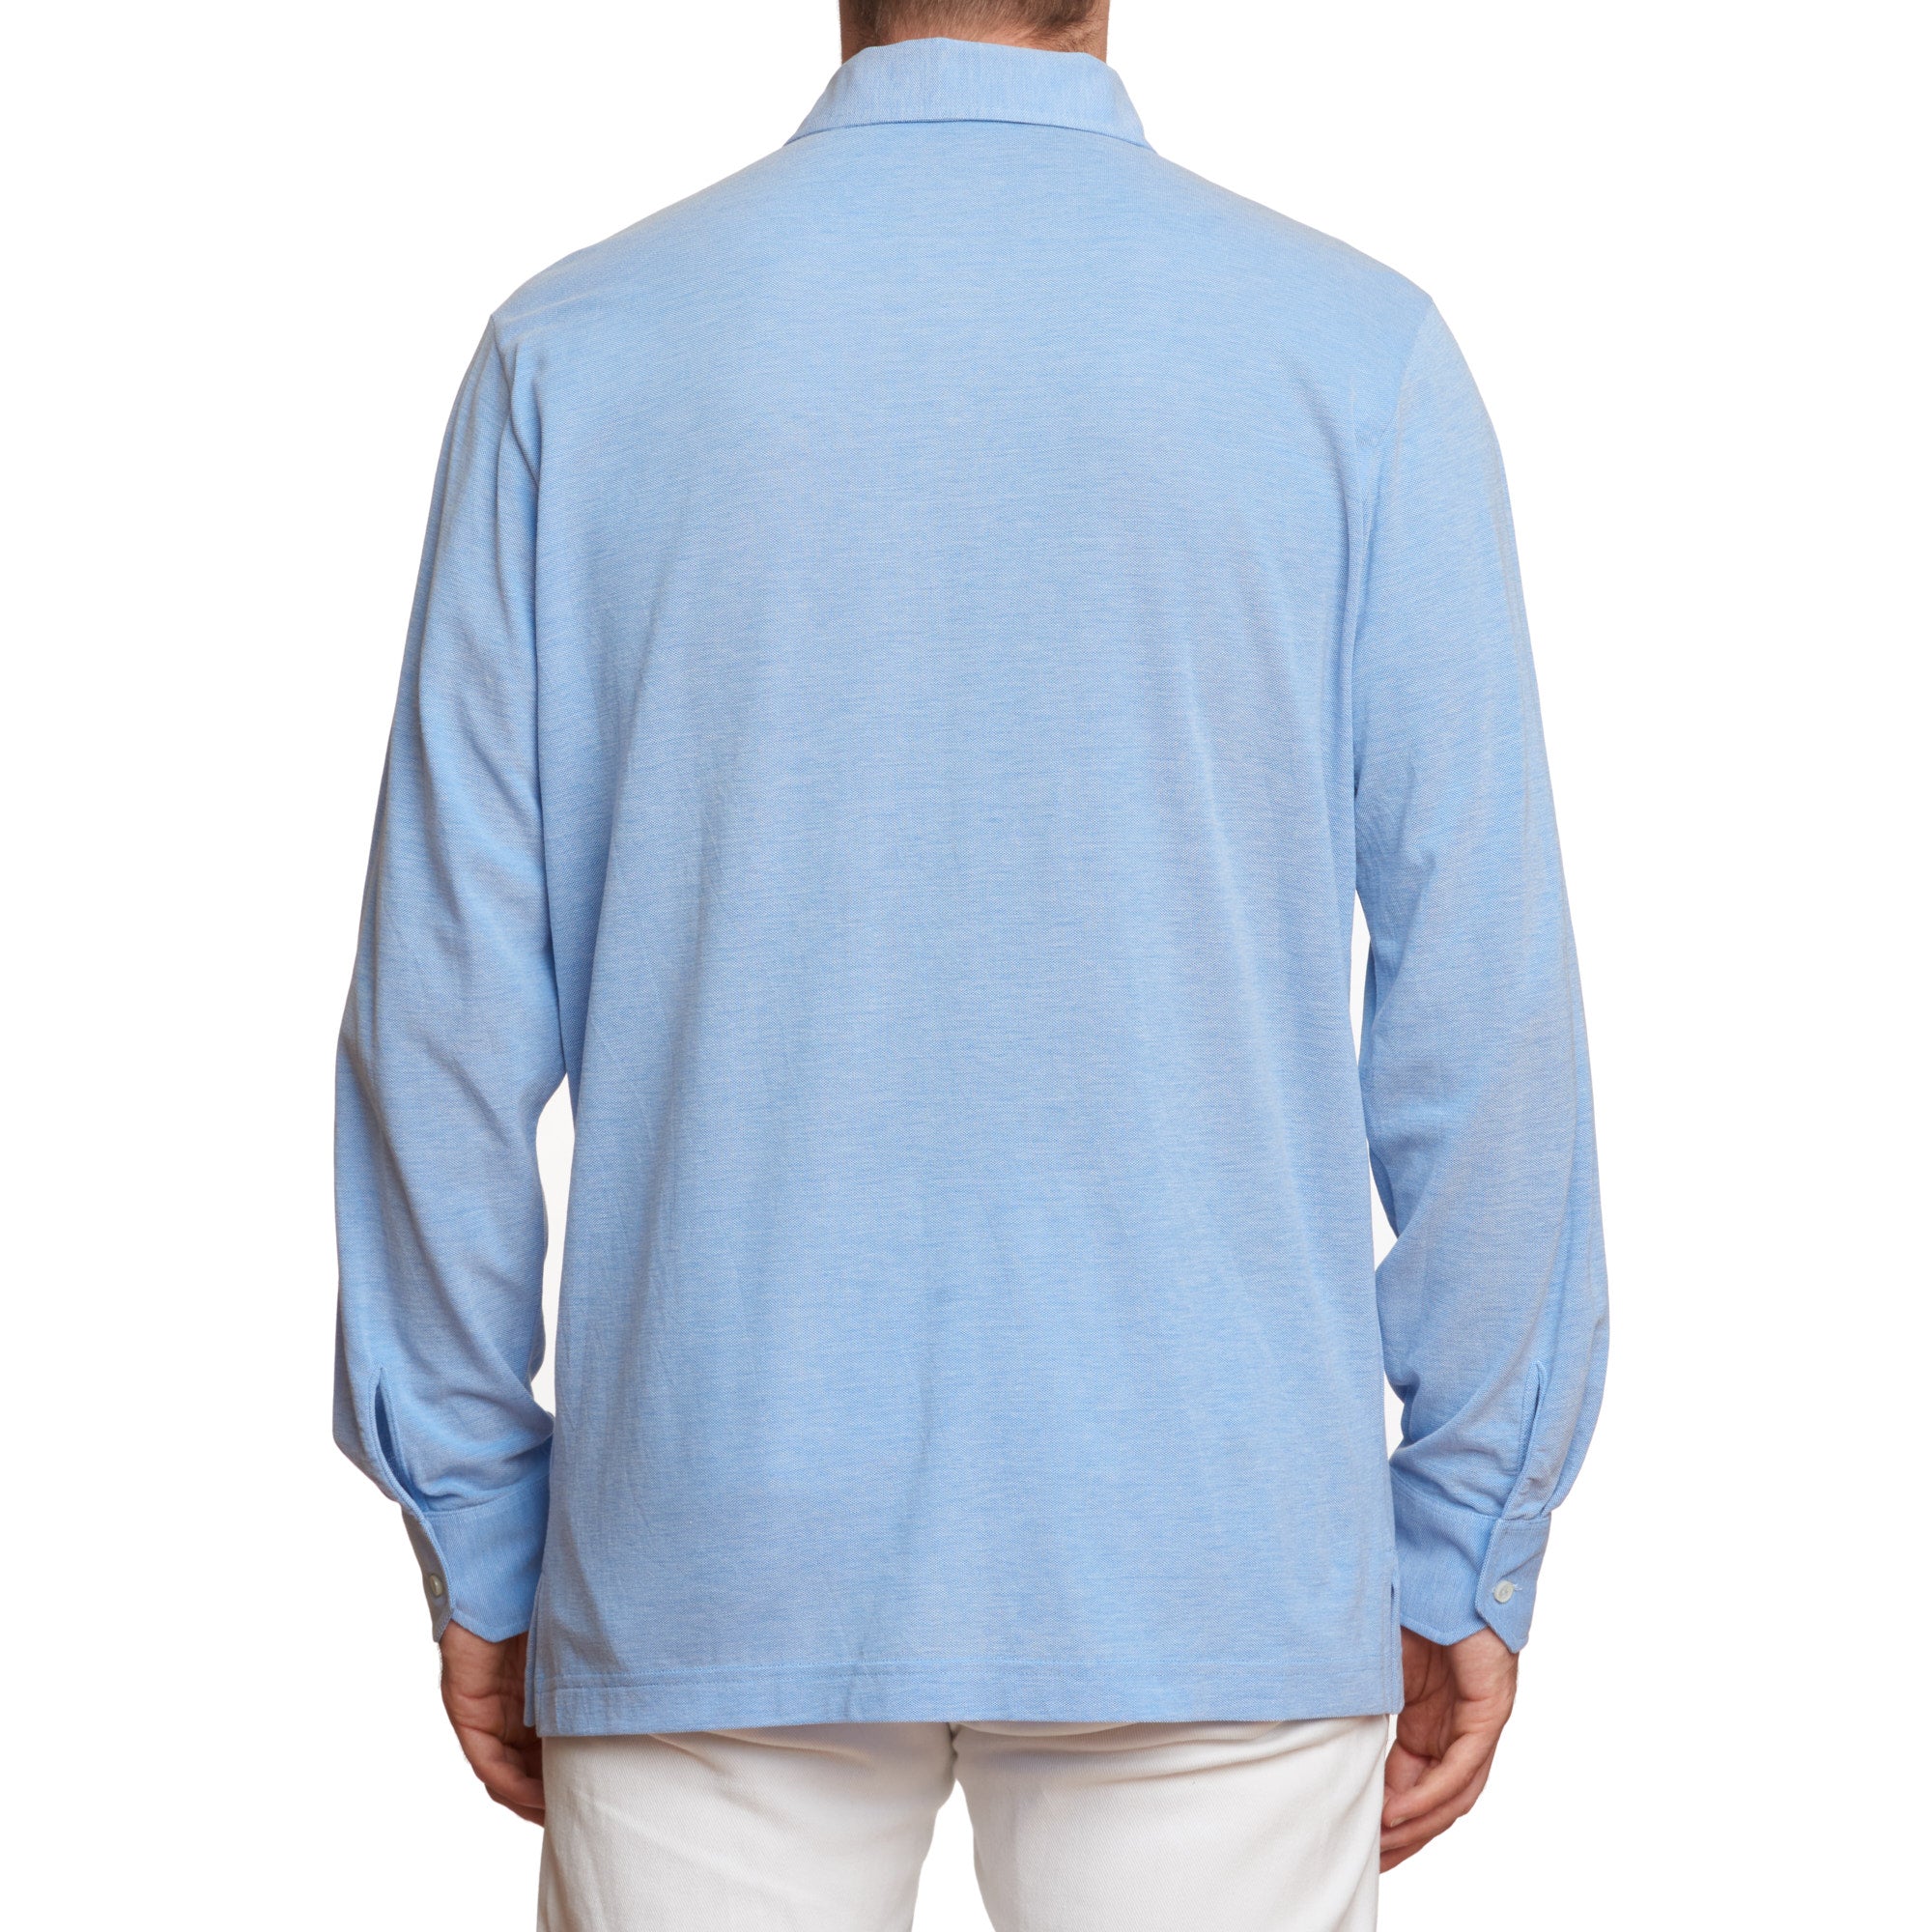 M.BARDELLI Milano Solid Light Blue Oxford Cotton 1 Pocket Casual Shirt Size L